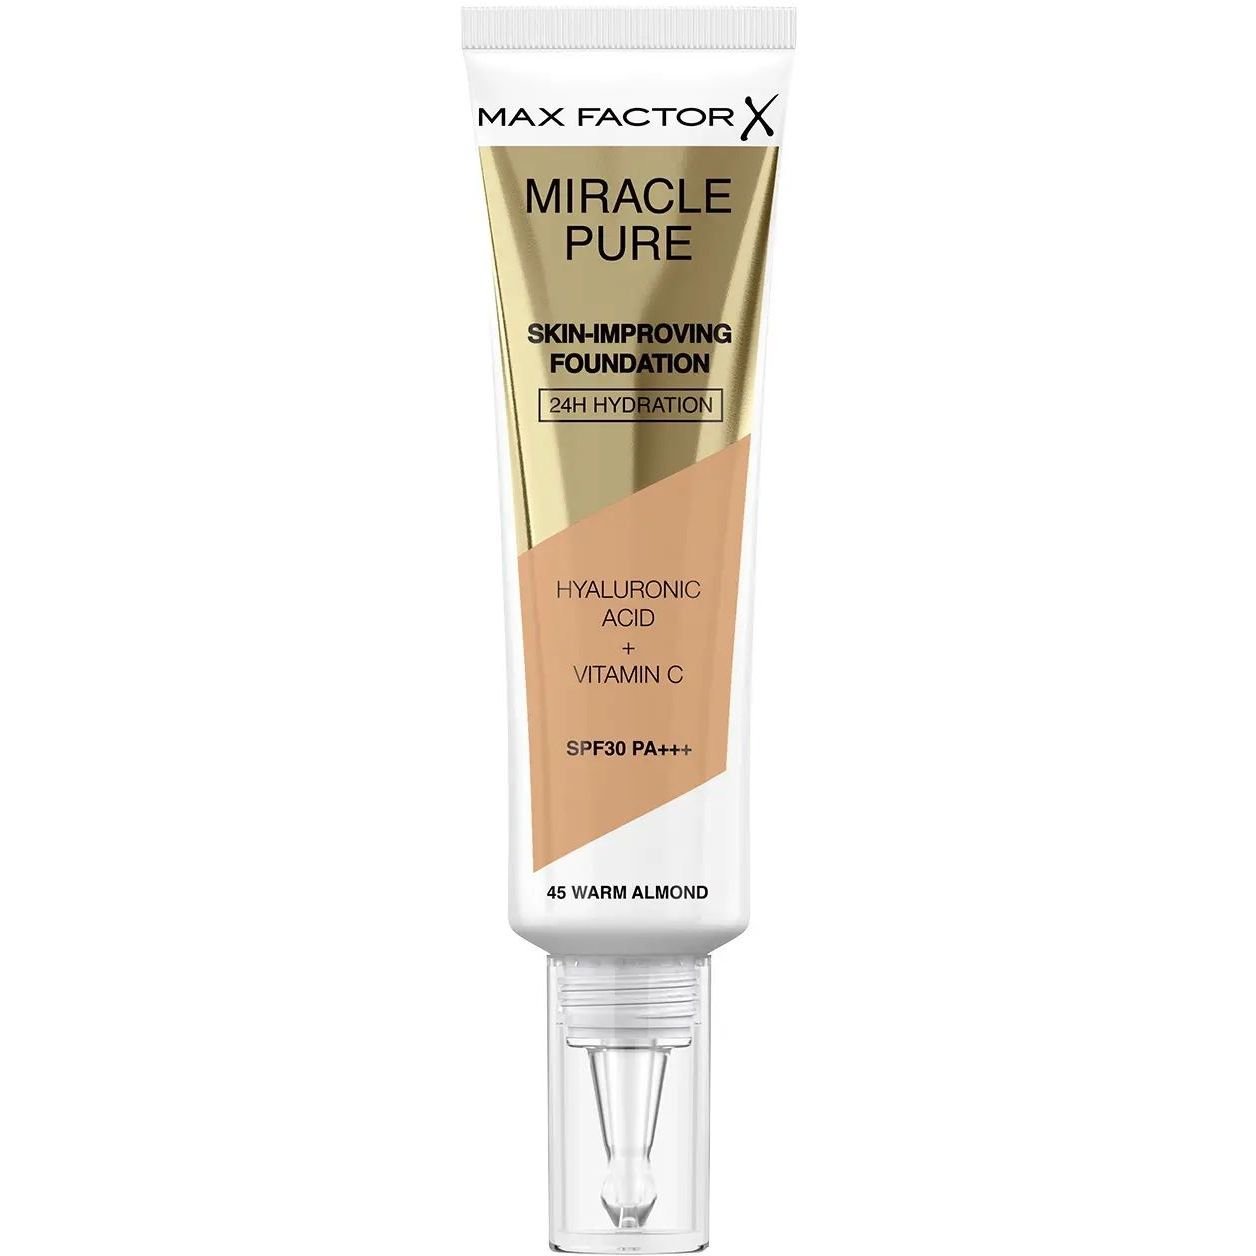 Тональная основа Max Factor Miracle Pure Skin-Improving Foundation SPF30 тон 045 (Warm Almond) 30 мл - фото 1